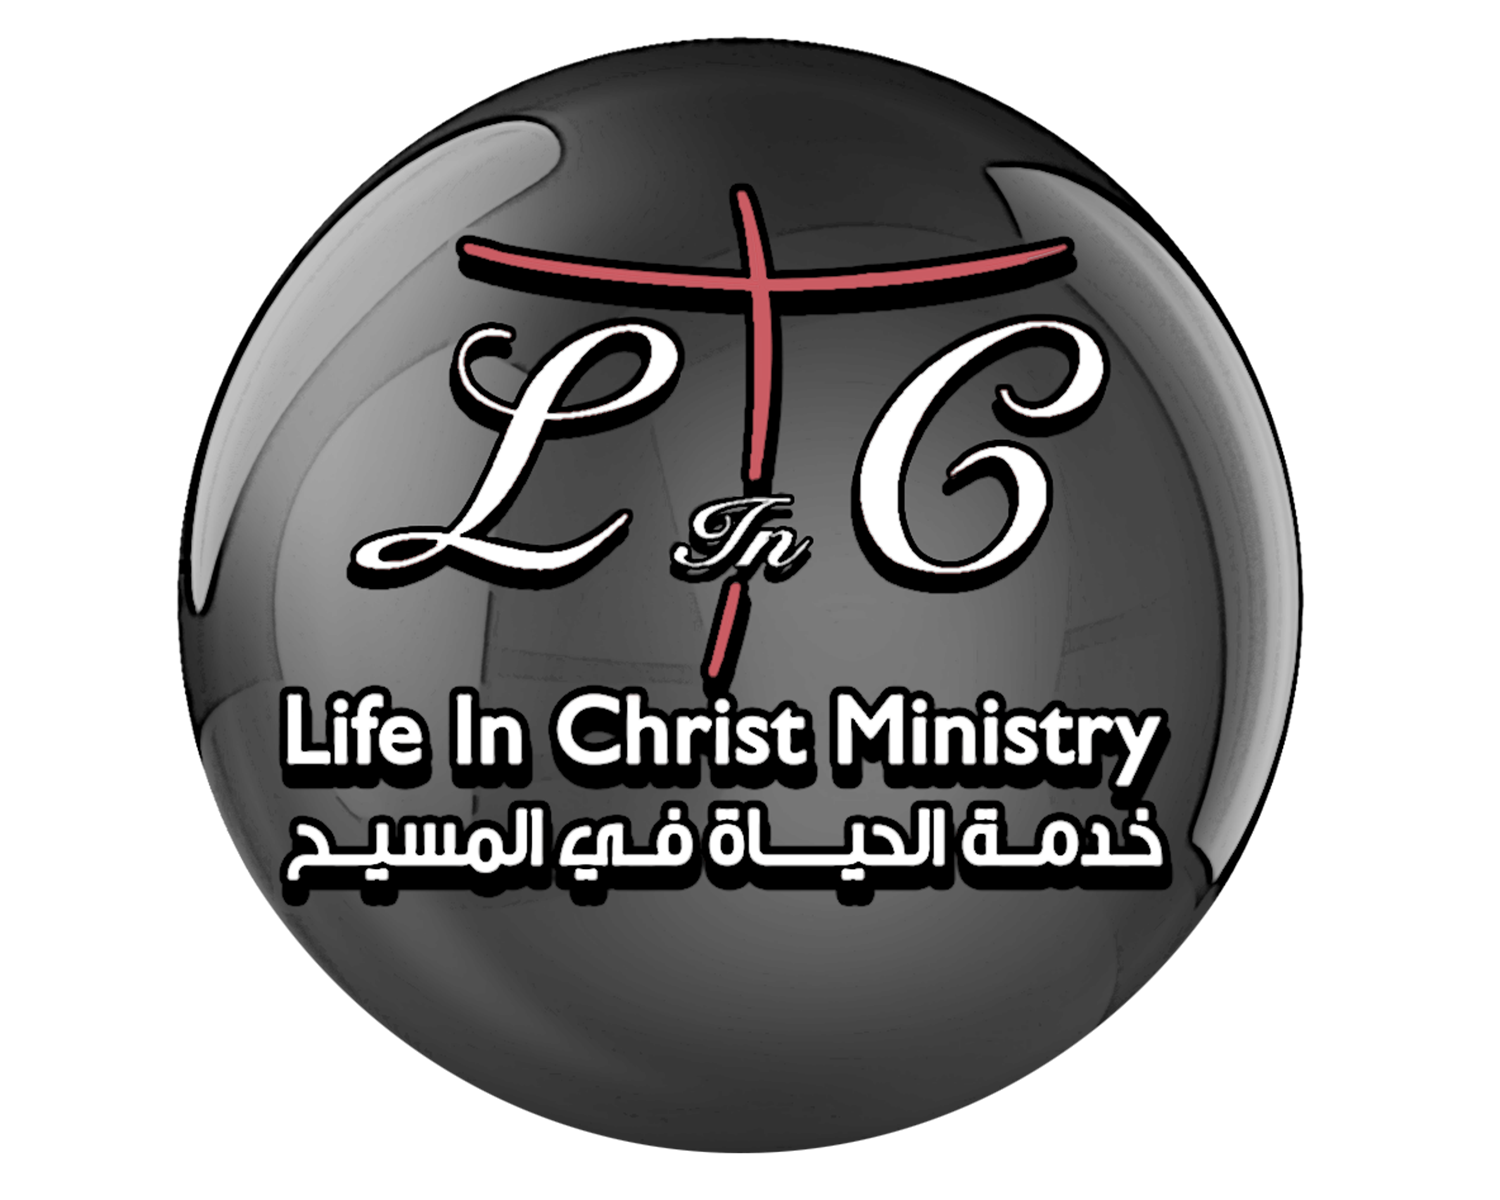 Life in Christ logo